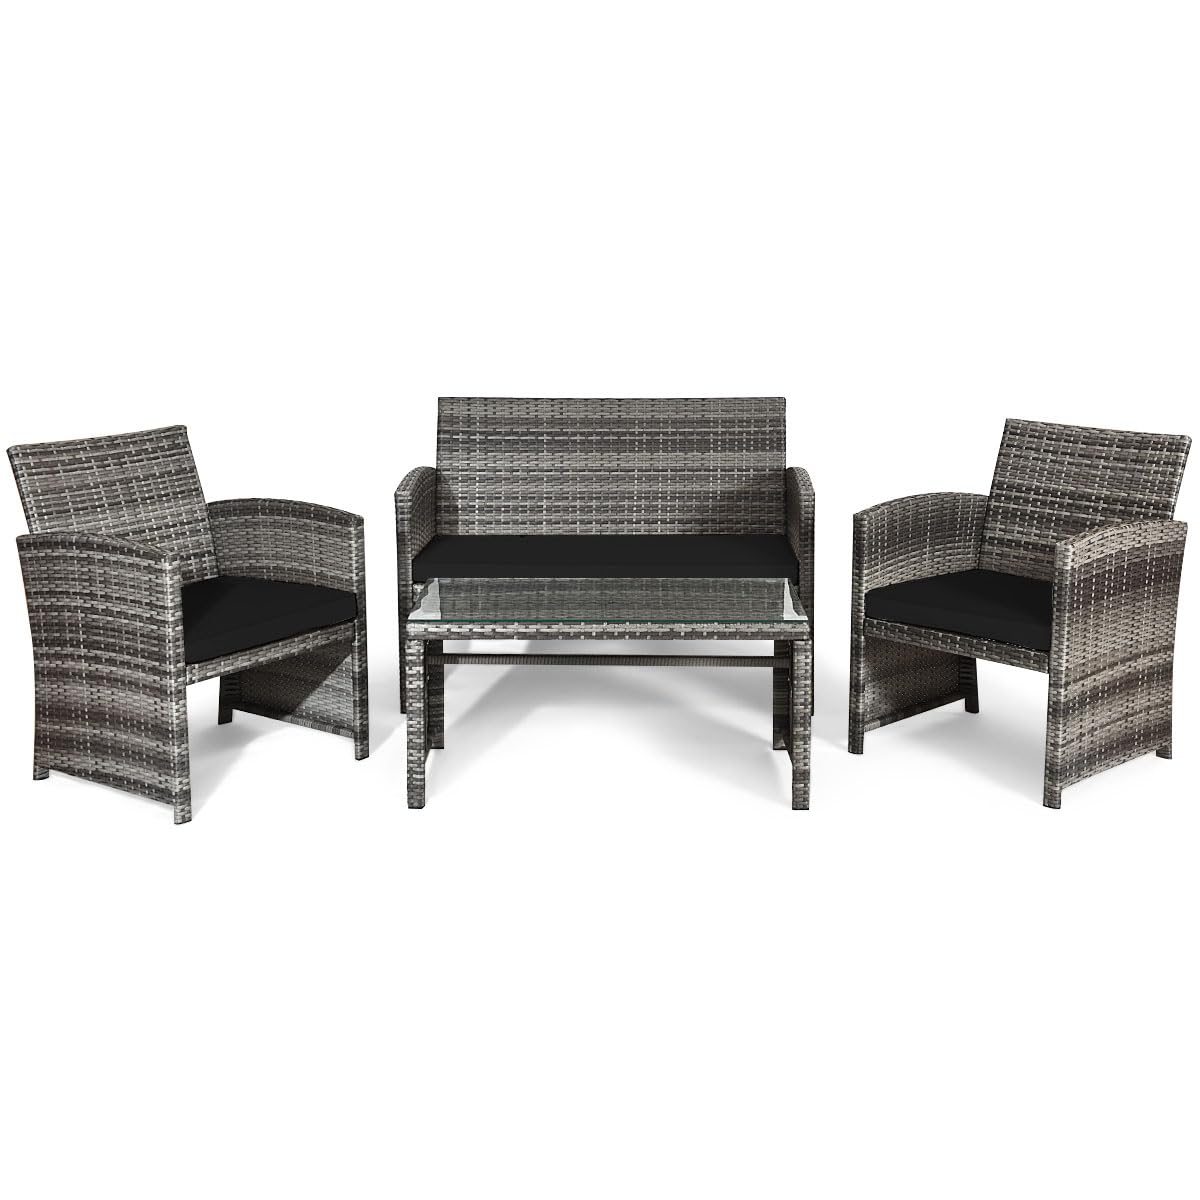 Giantex 4 Pc Rattan Patio Furniture Garden Lawn Sofa Cushioned Seat Mix Gray Wicker Conversation Sets